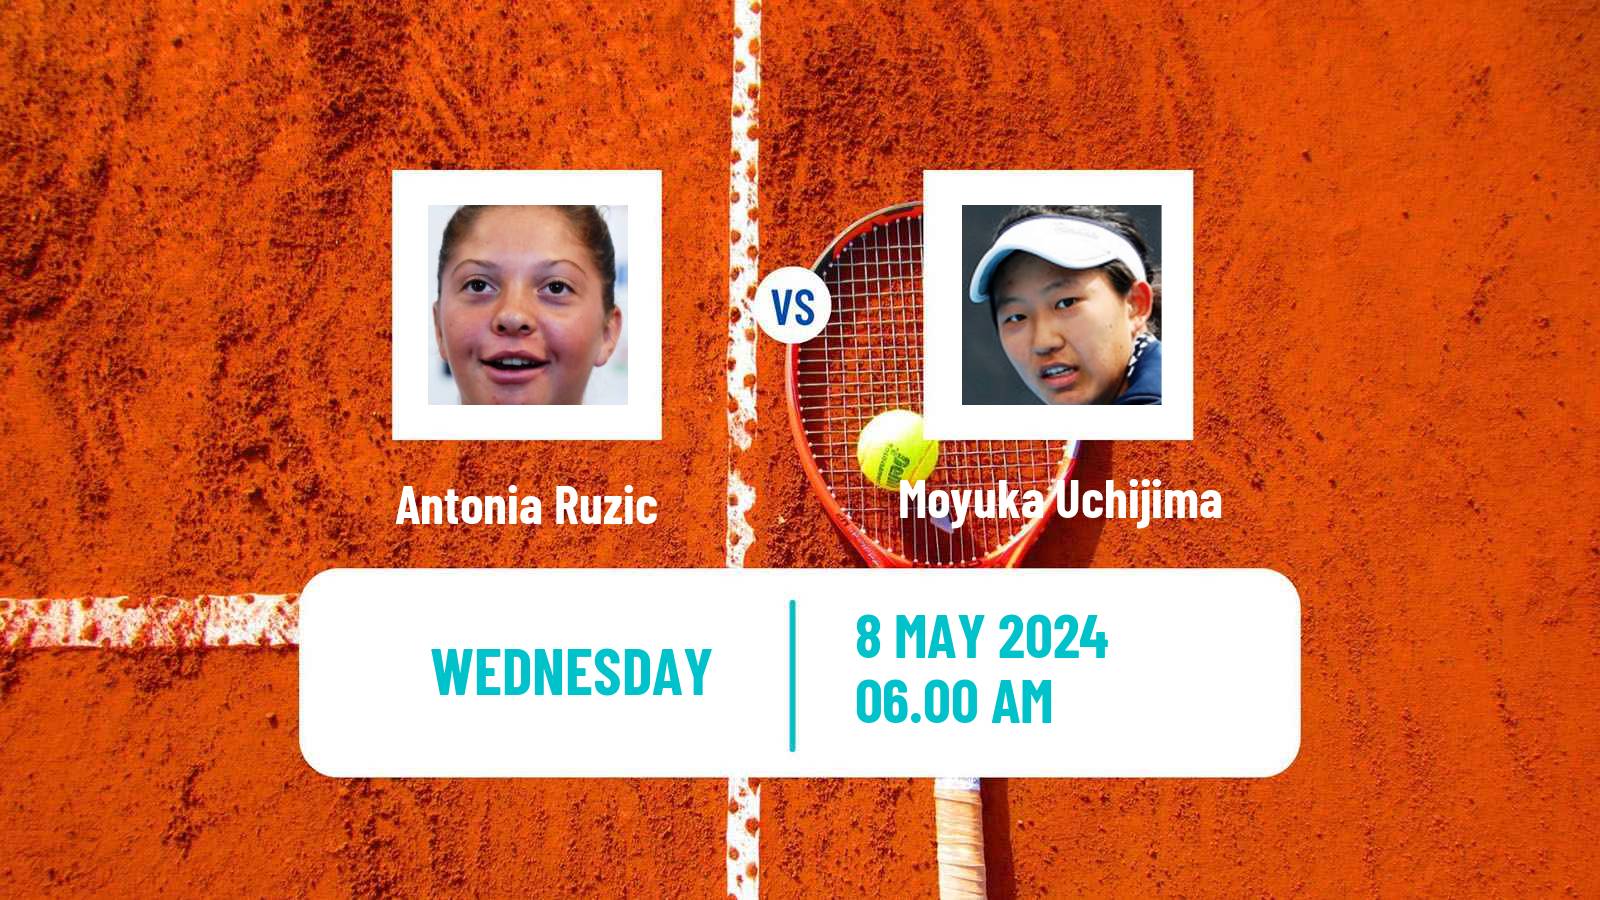 Tennis ITF W75 Trnava 2 Women Antonia Ruzic - Moyuka Uchijima